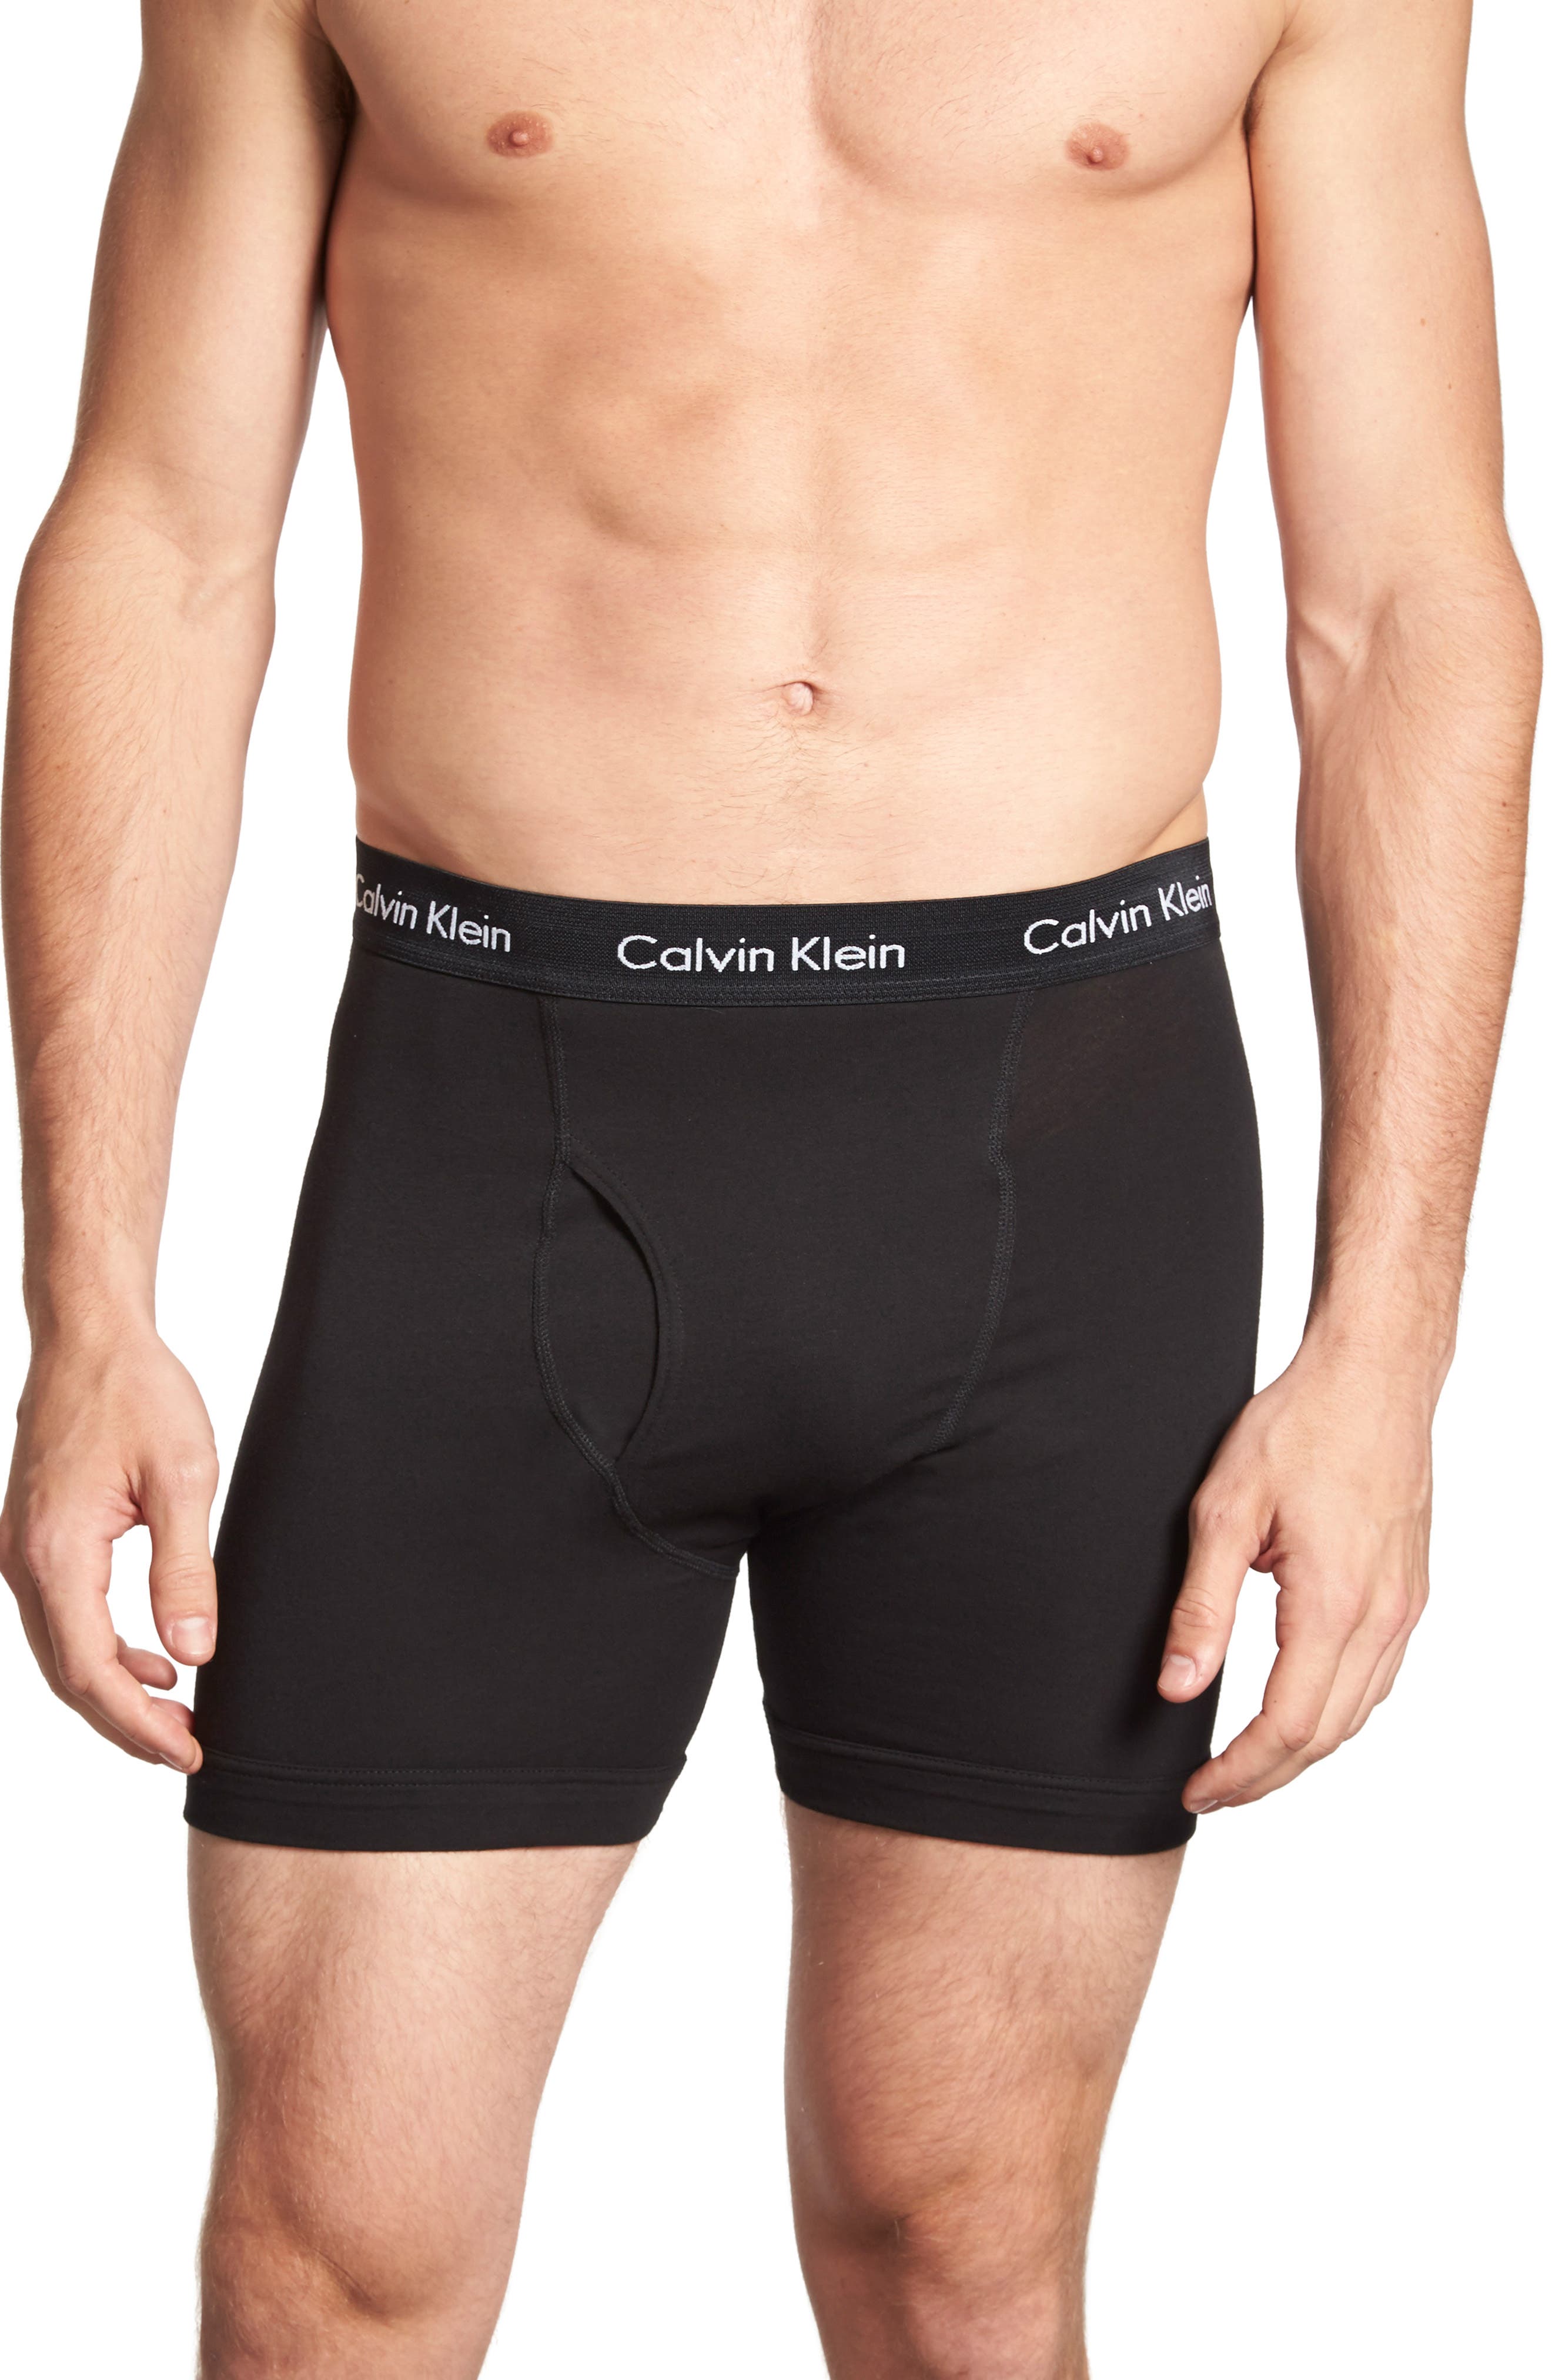 calvin klein underpants